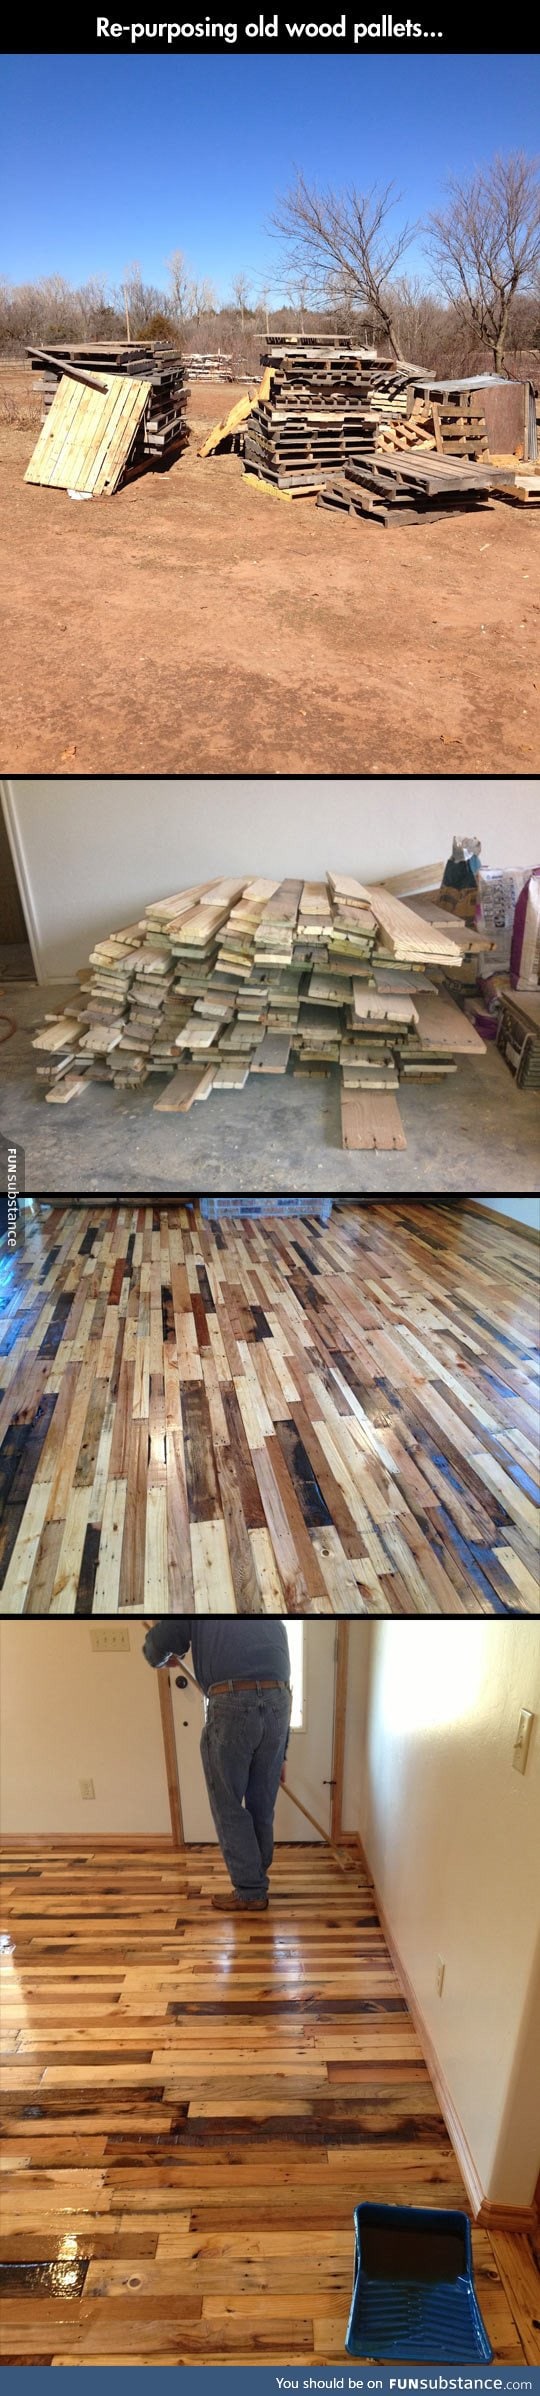 Reusing old woods pallets as flooring